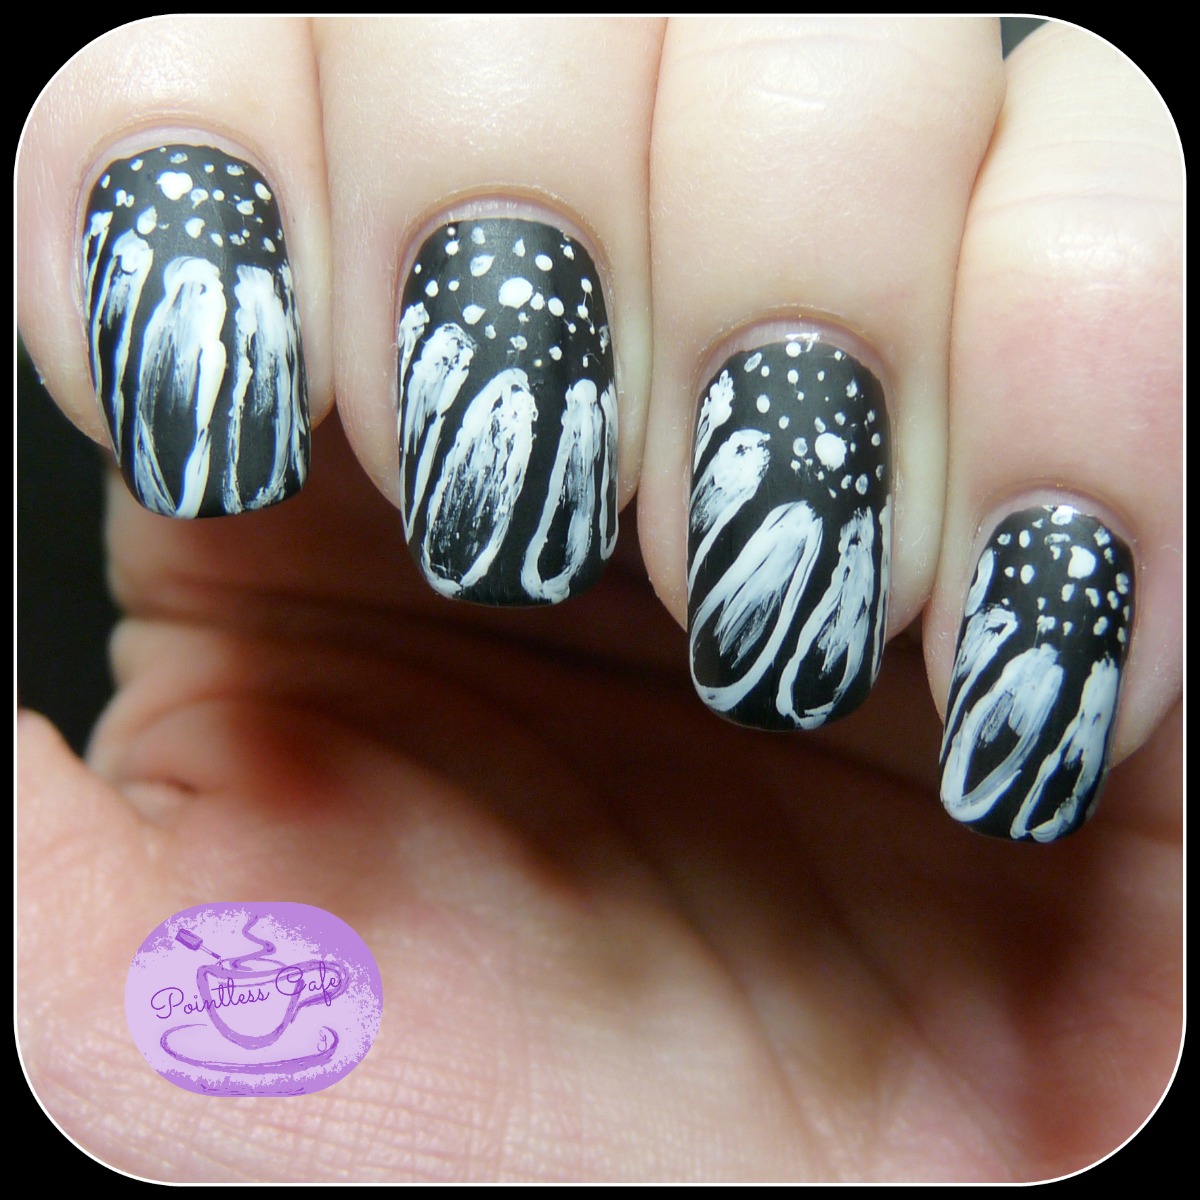 black and white nail art